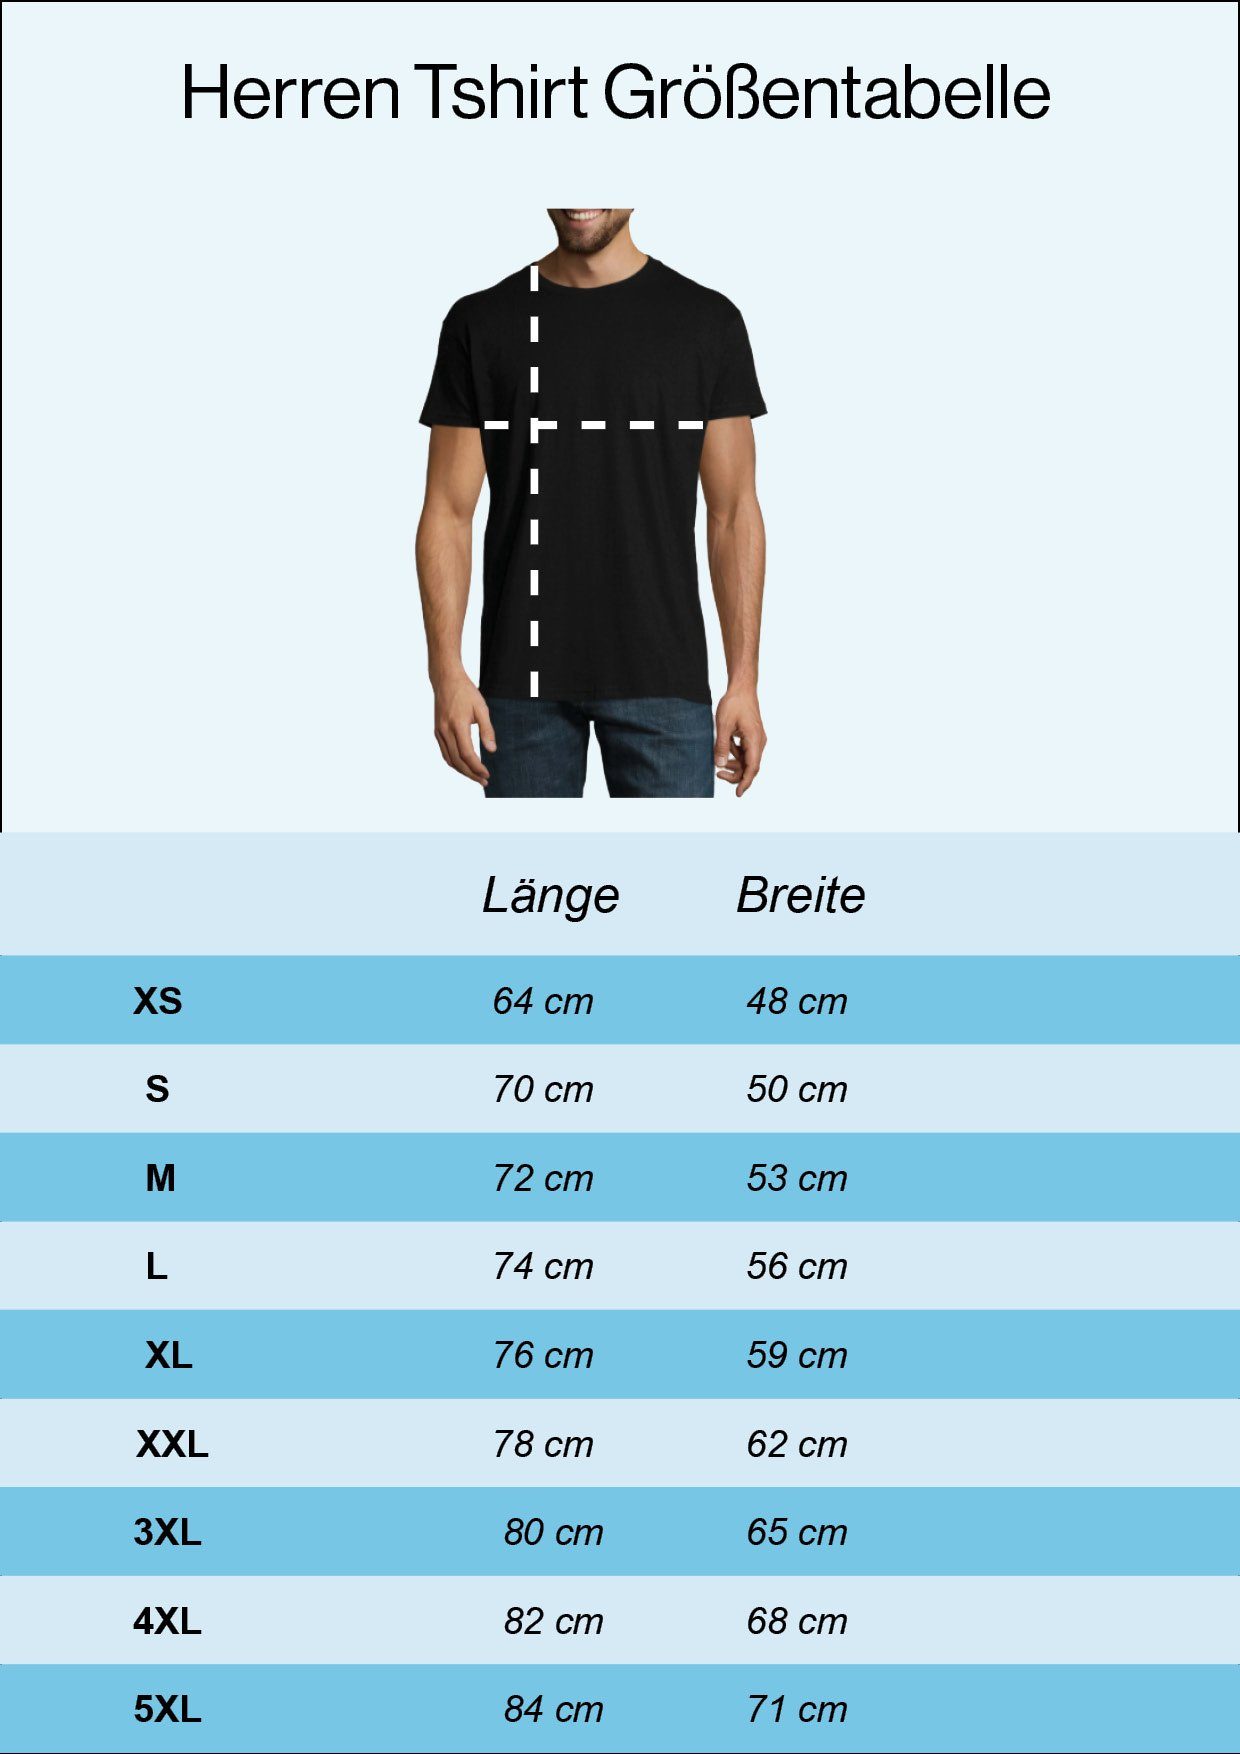 Frotnprint Weiß T-Shirt Van trendigem A-Team Youth Designz Herren T-Shirt mit